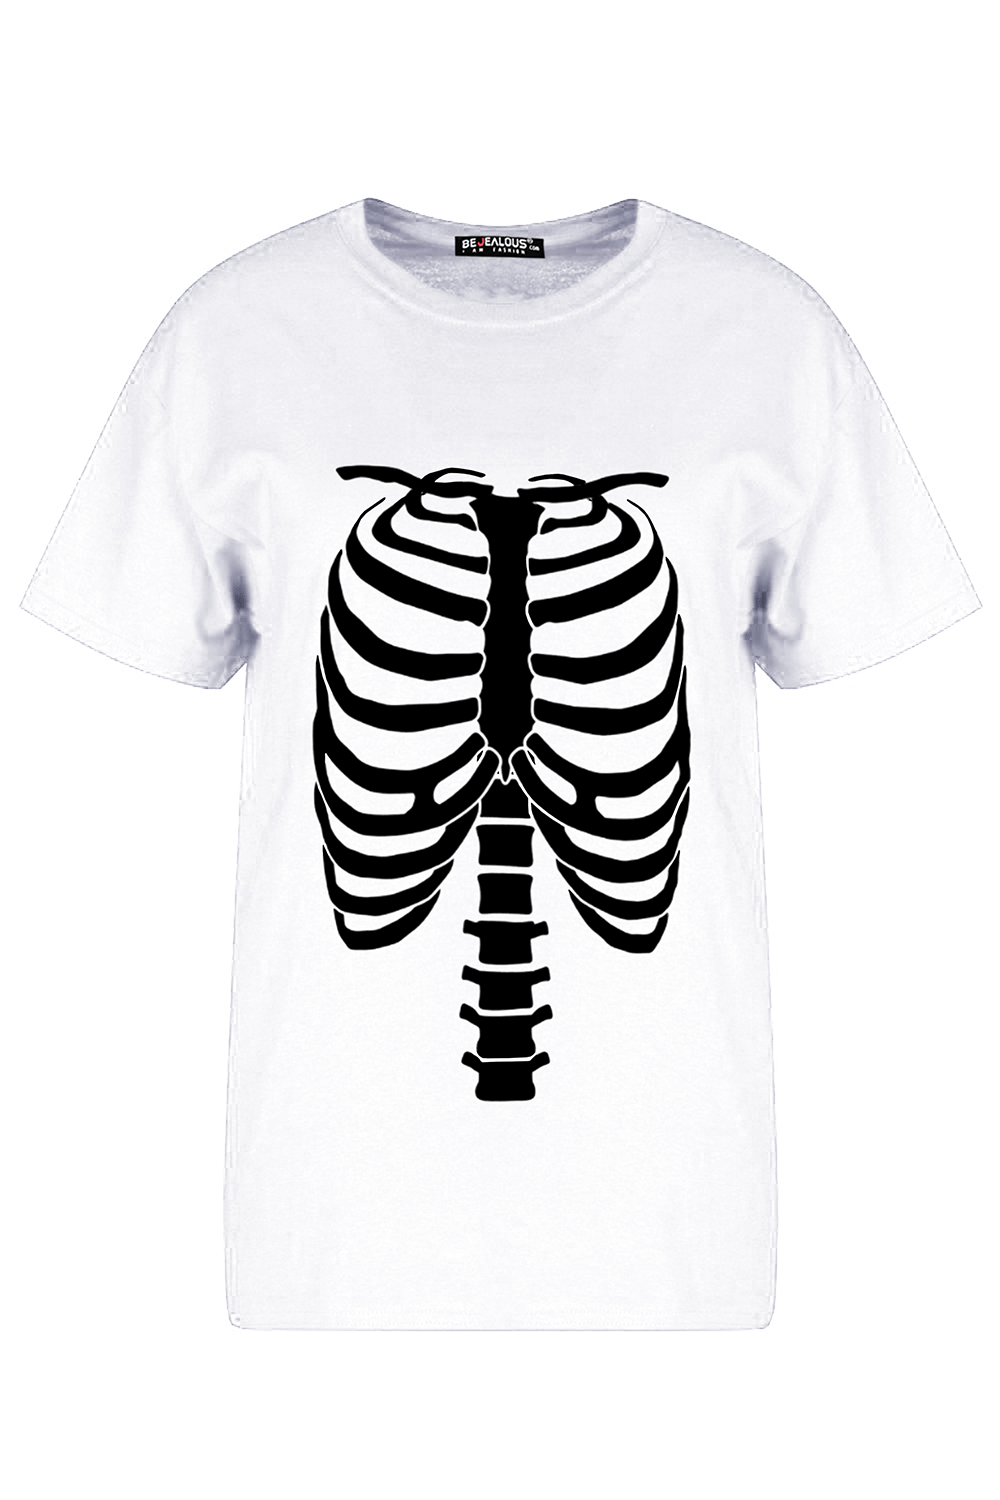 Grace Halloween Baggy Skeleton Costume T-Shirt